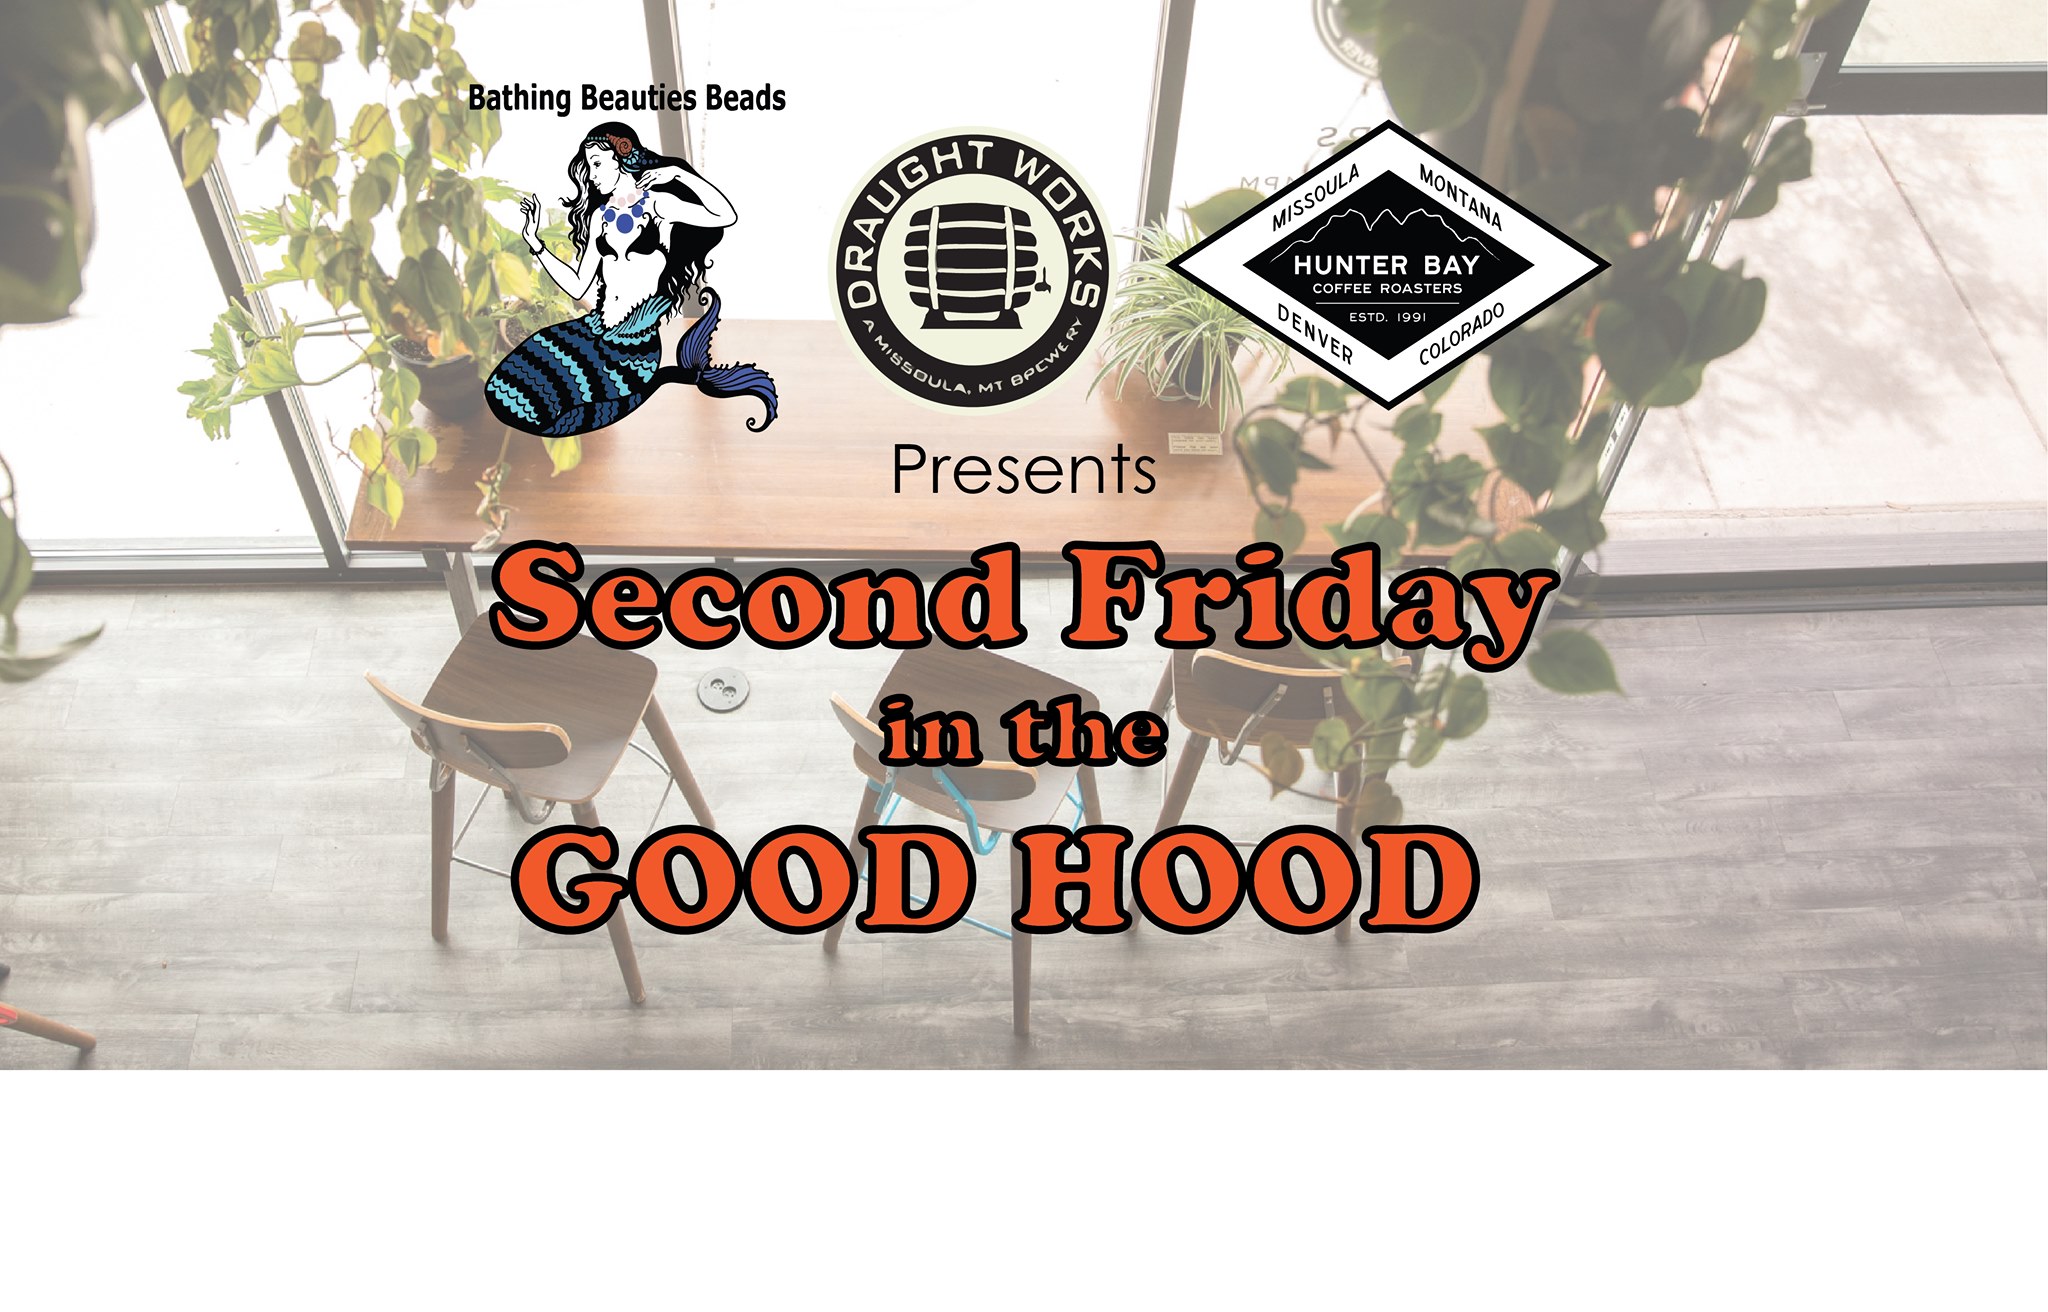 Good Hood 2nd Friday